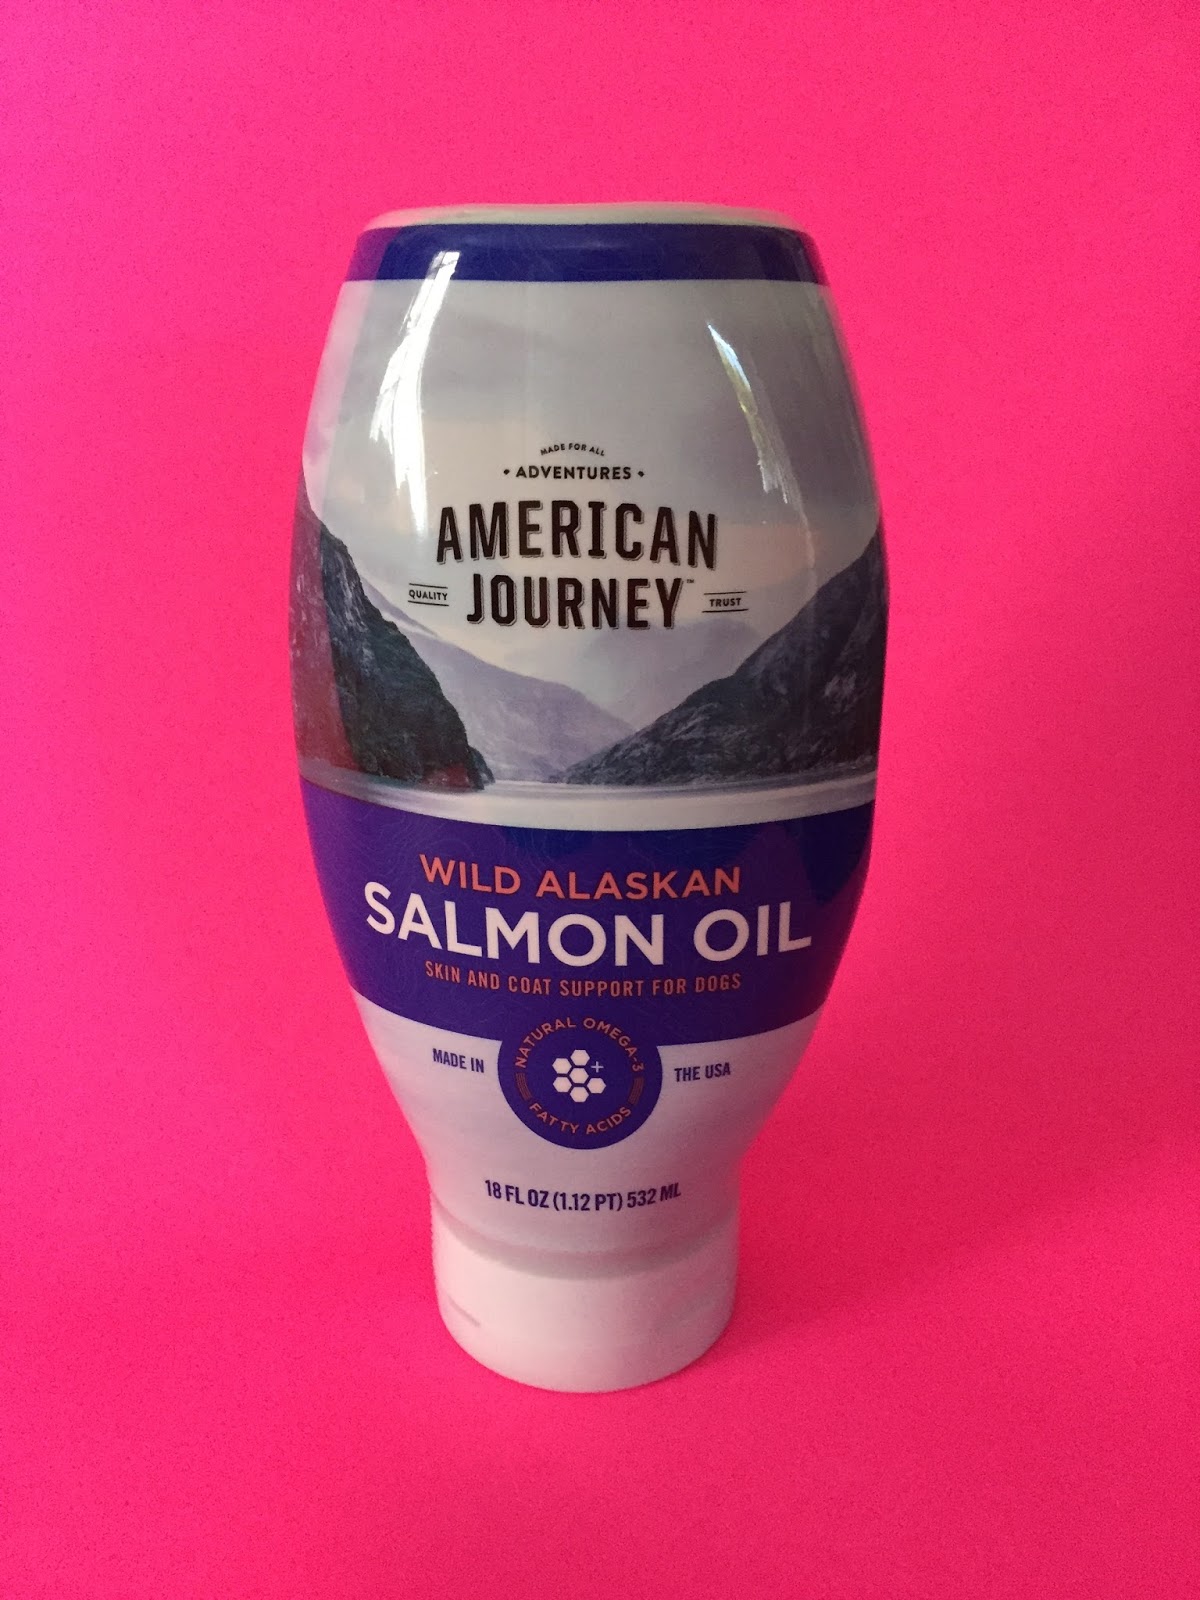 american journey salmon oil